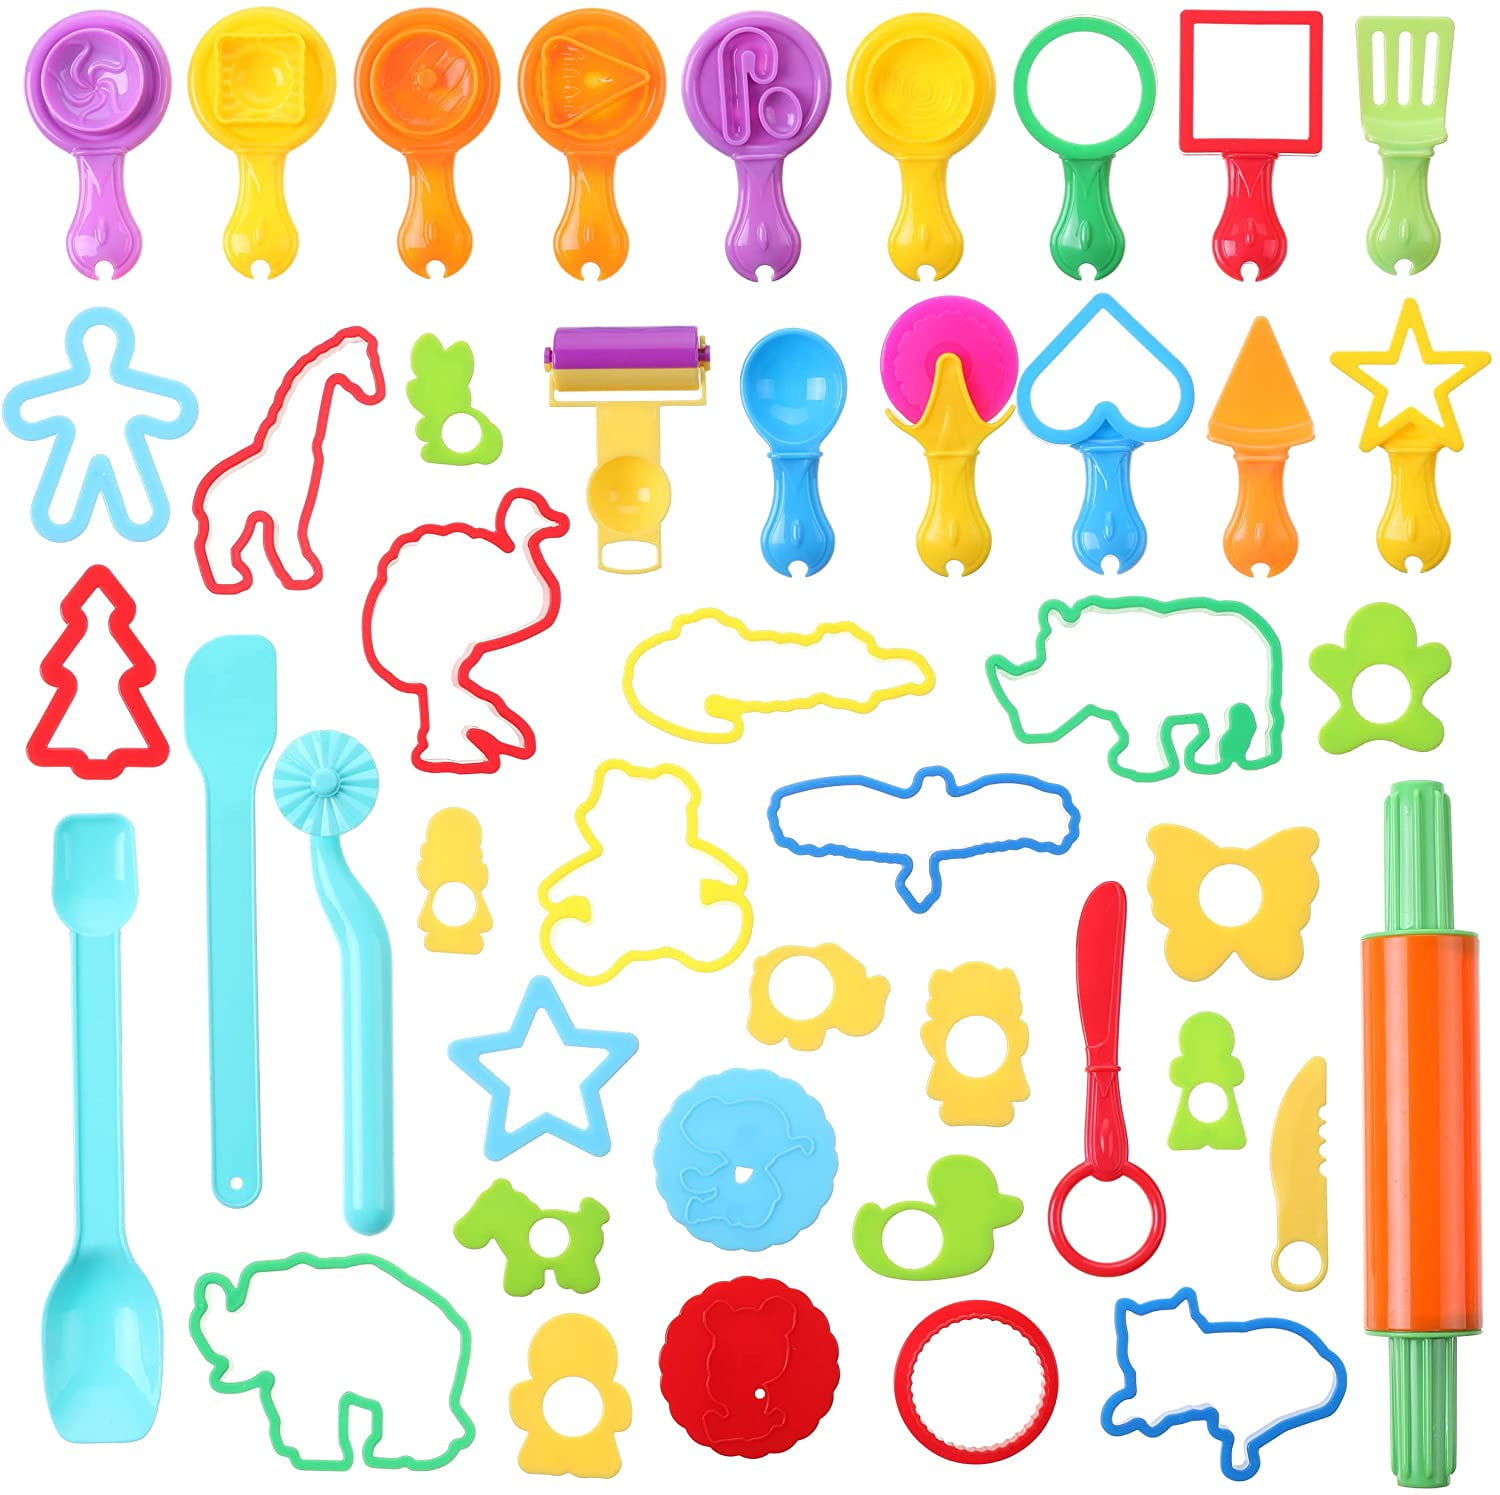 Mr. Pen- Play Dough Tools Kit, 45 Pcs, Playdough Toys, Playdough Sets for Kids, Other